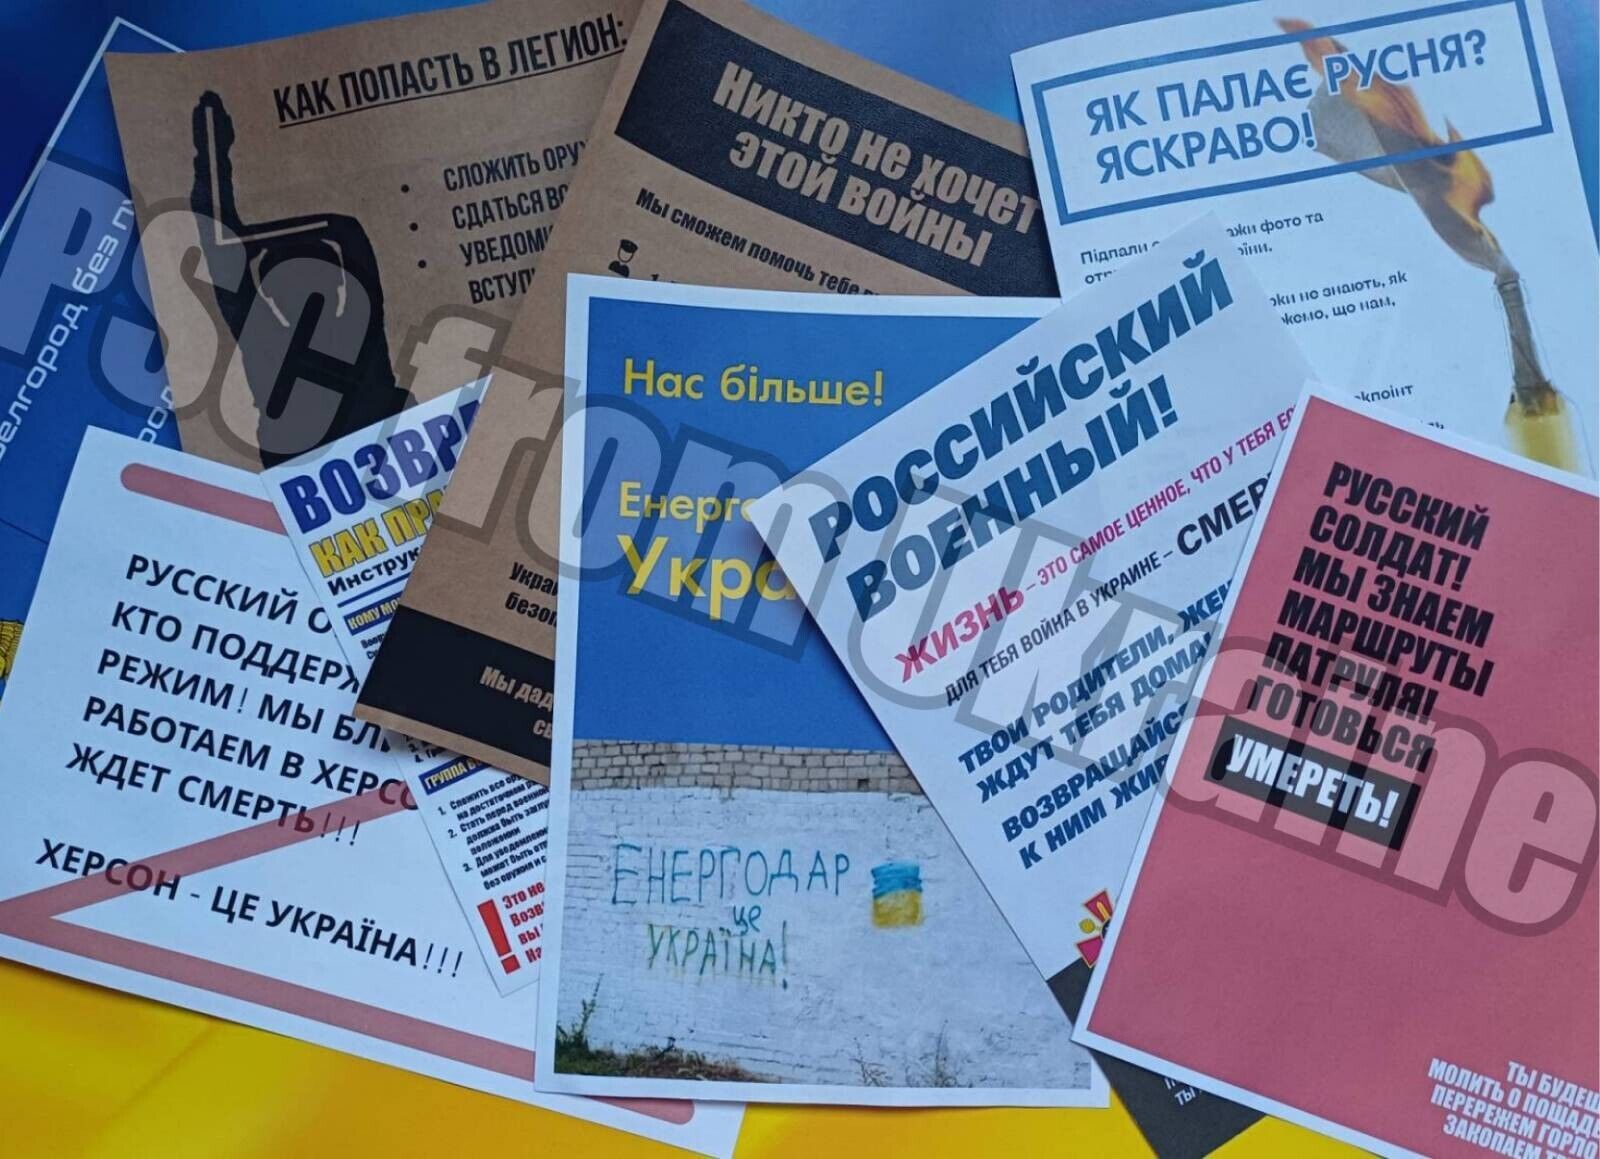 Ukraine propaganda. Anti-russia. Set №2- 10 propaganda leaflet. Soldier,give up